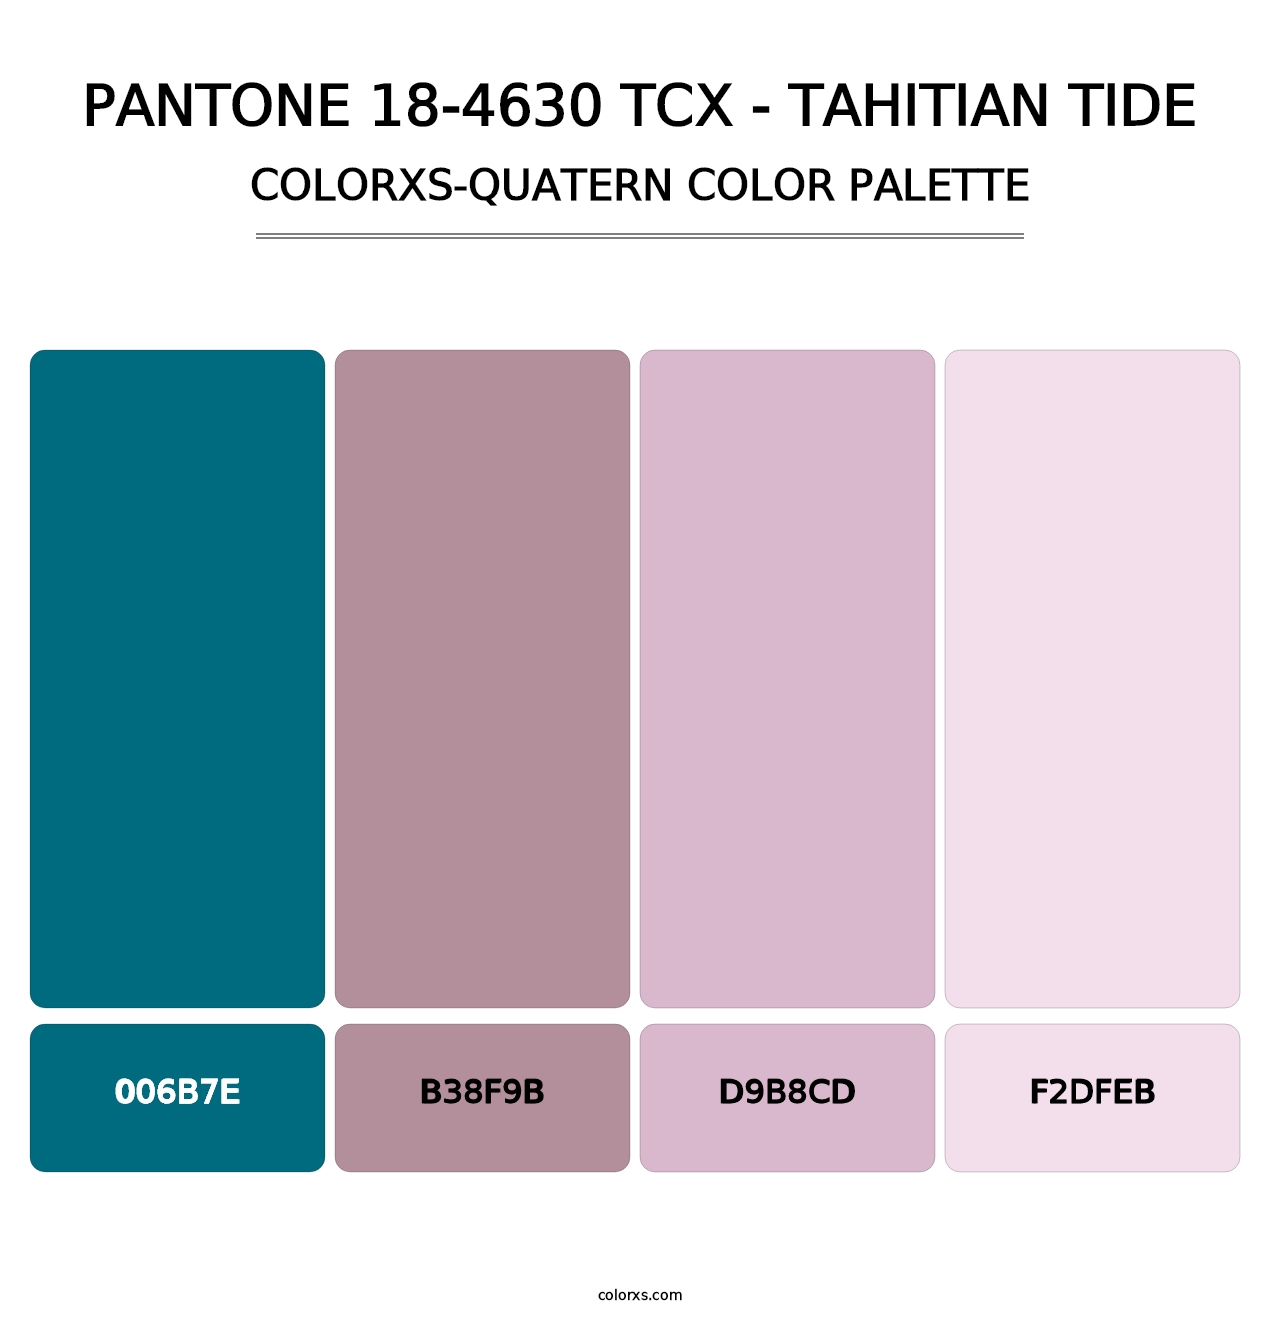 PANTONE 18-4630 TCX - Tahitian Tide - Colorxs Quatern Palette